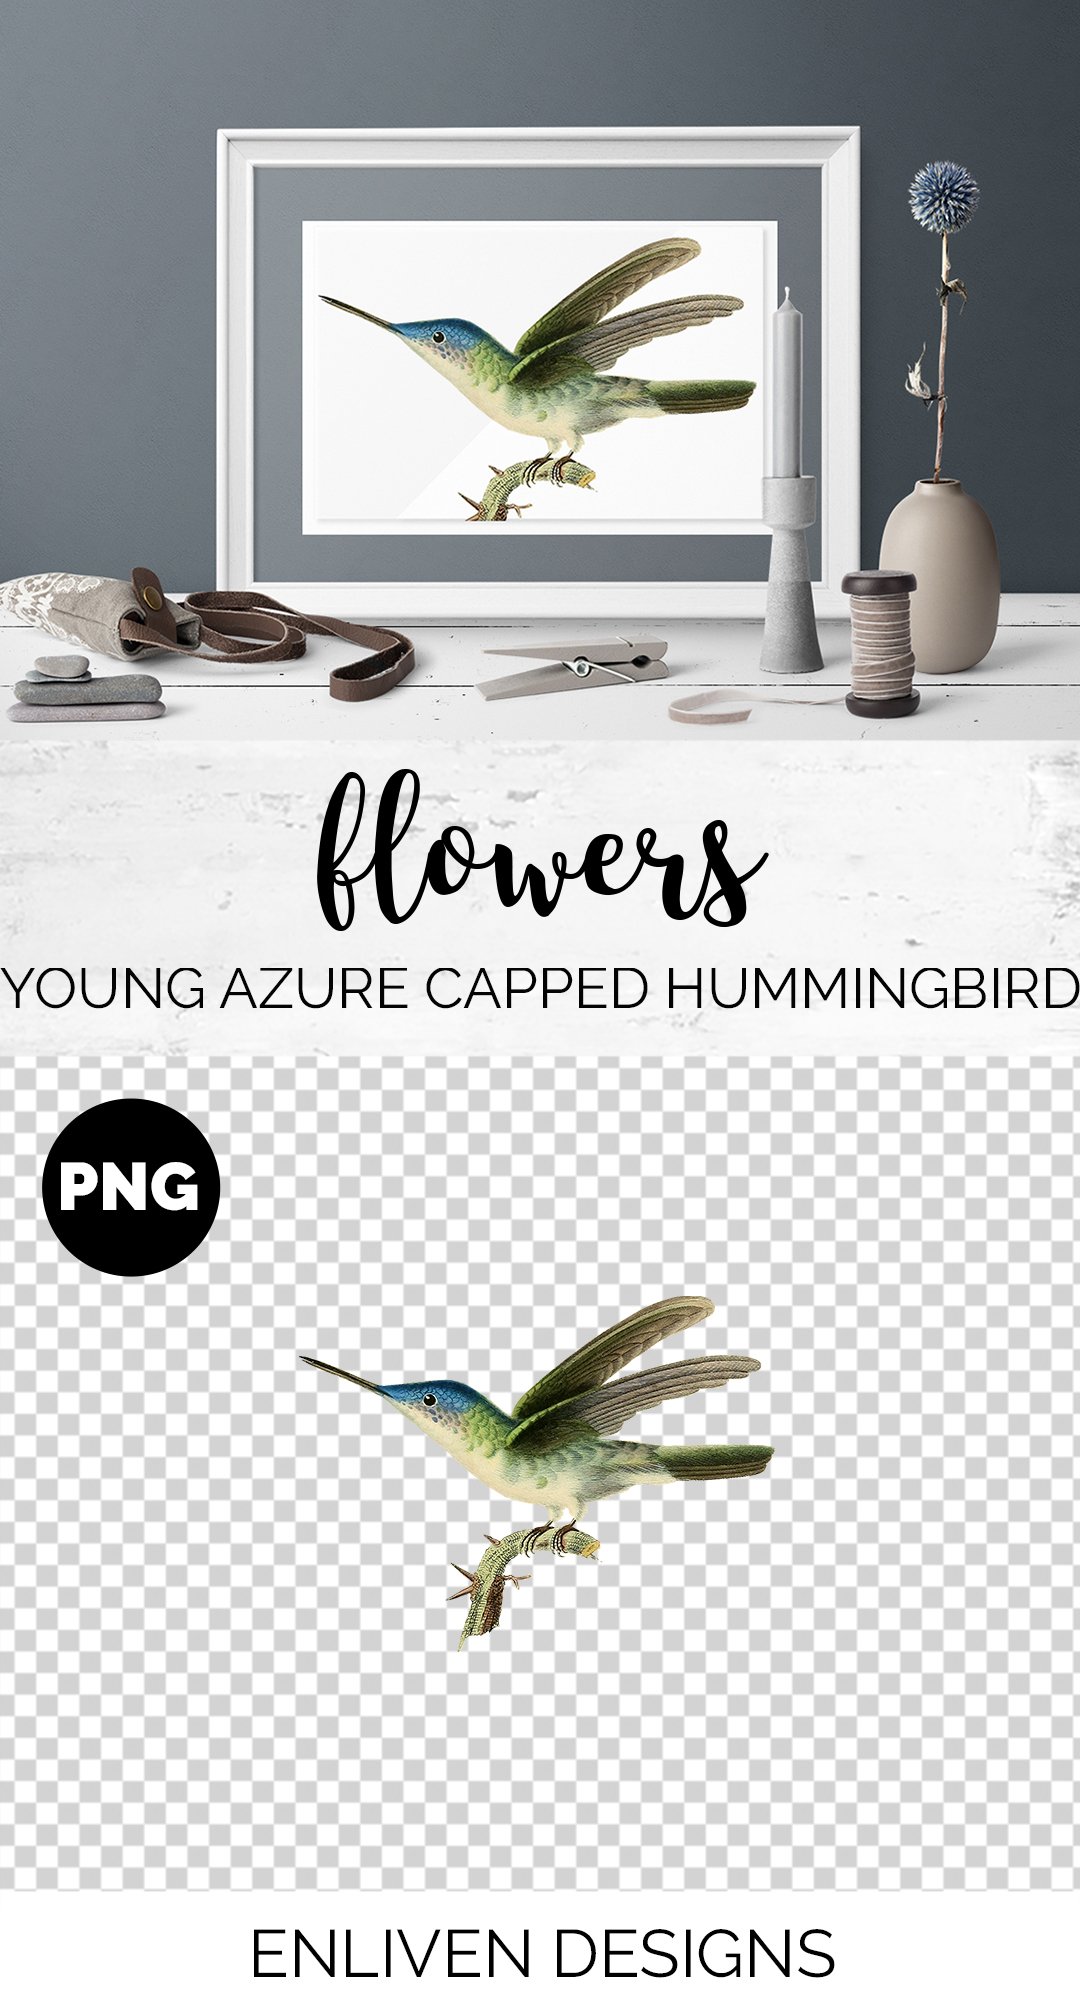 e01v01s 84561 young azure capped hummingbird b 311